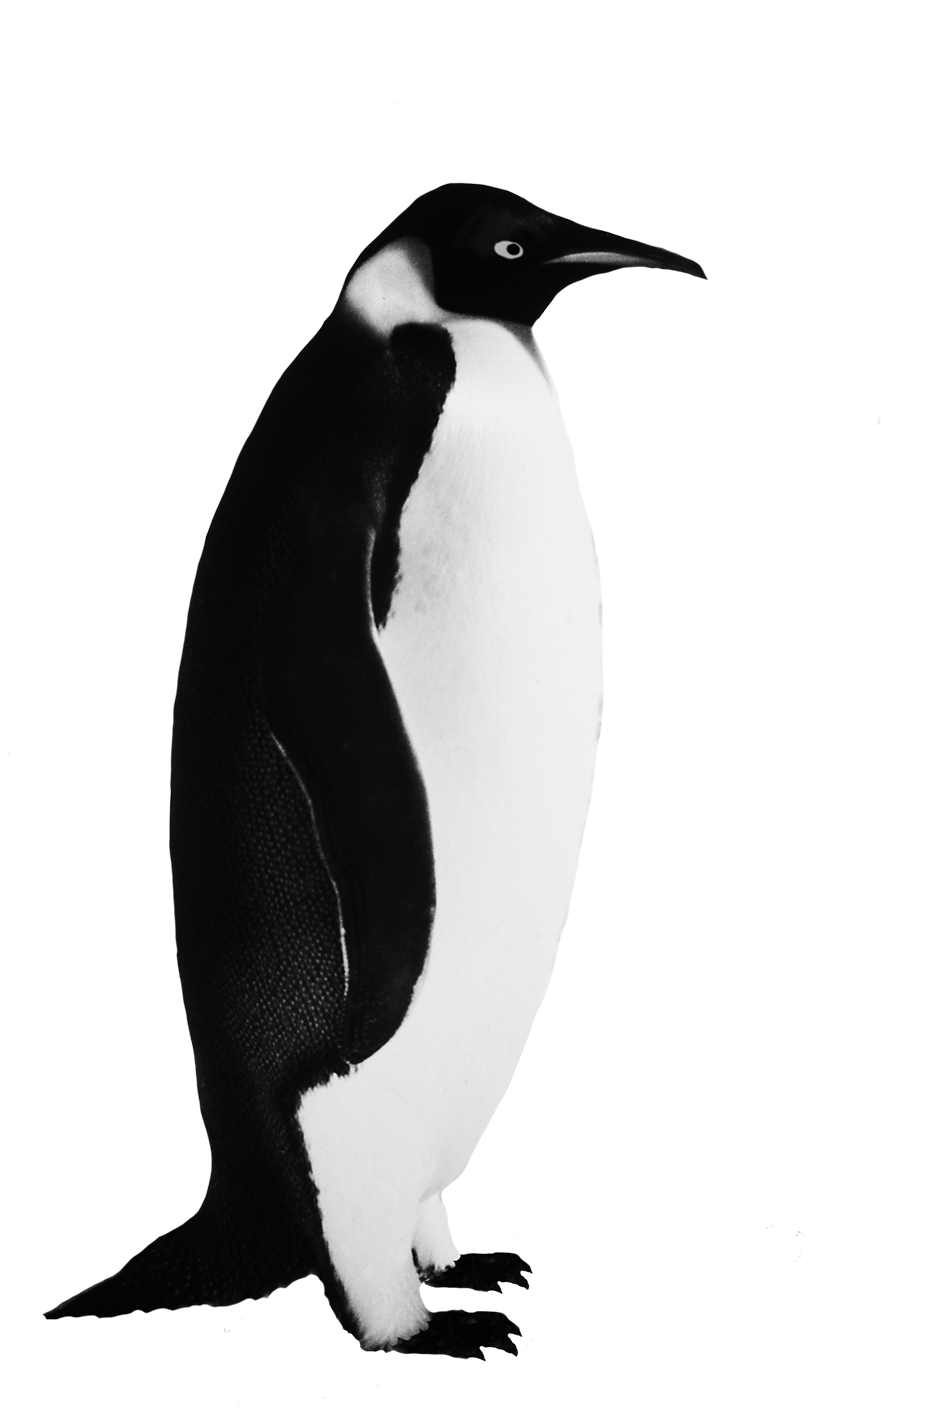 clipart birds penguin